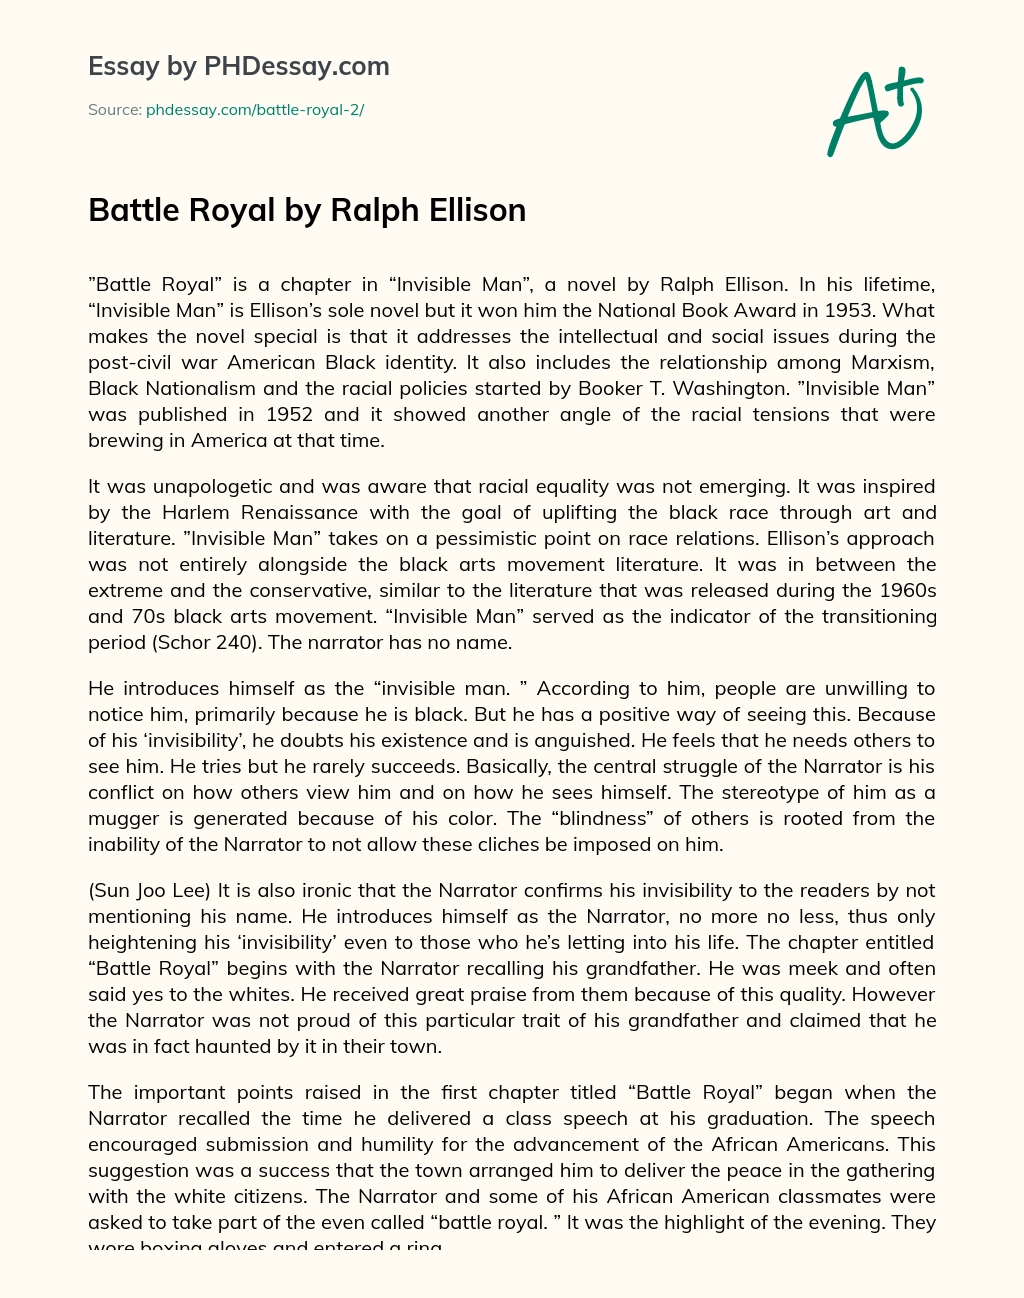 Battle Royal by Ralph Ellison essay